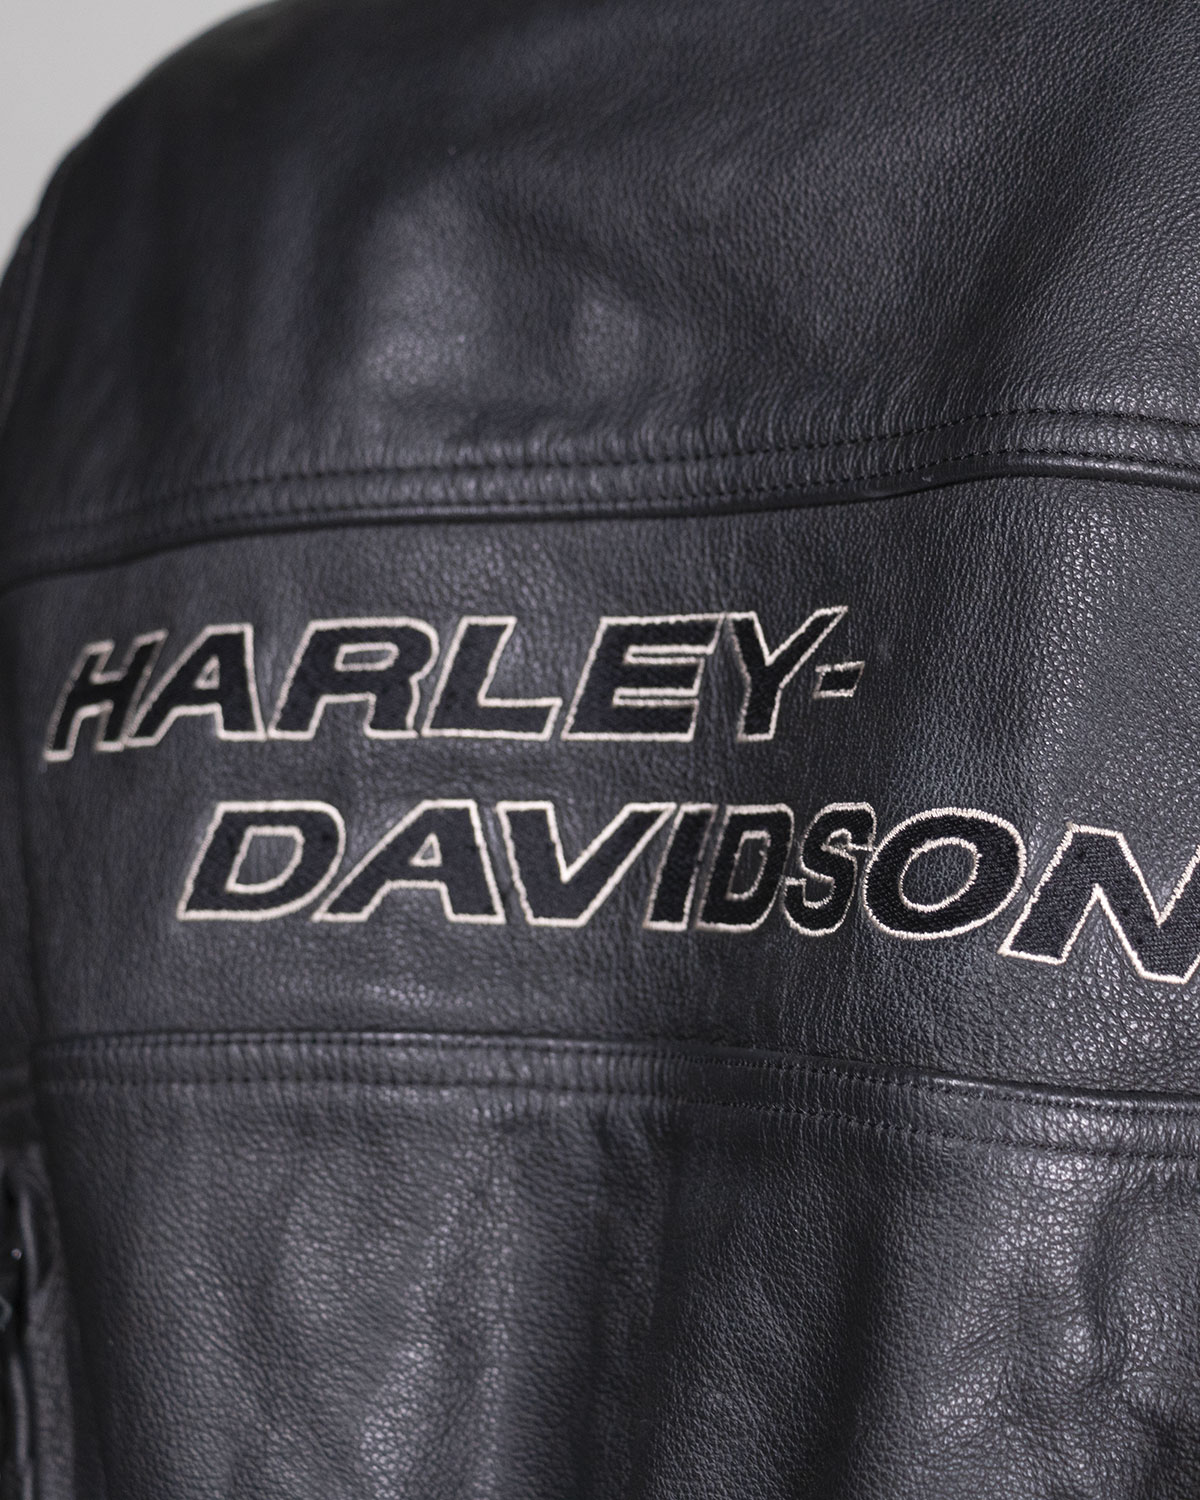 Harley Davidson - 100% Leather jacket